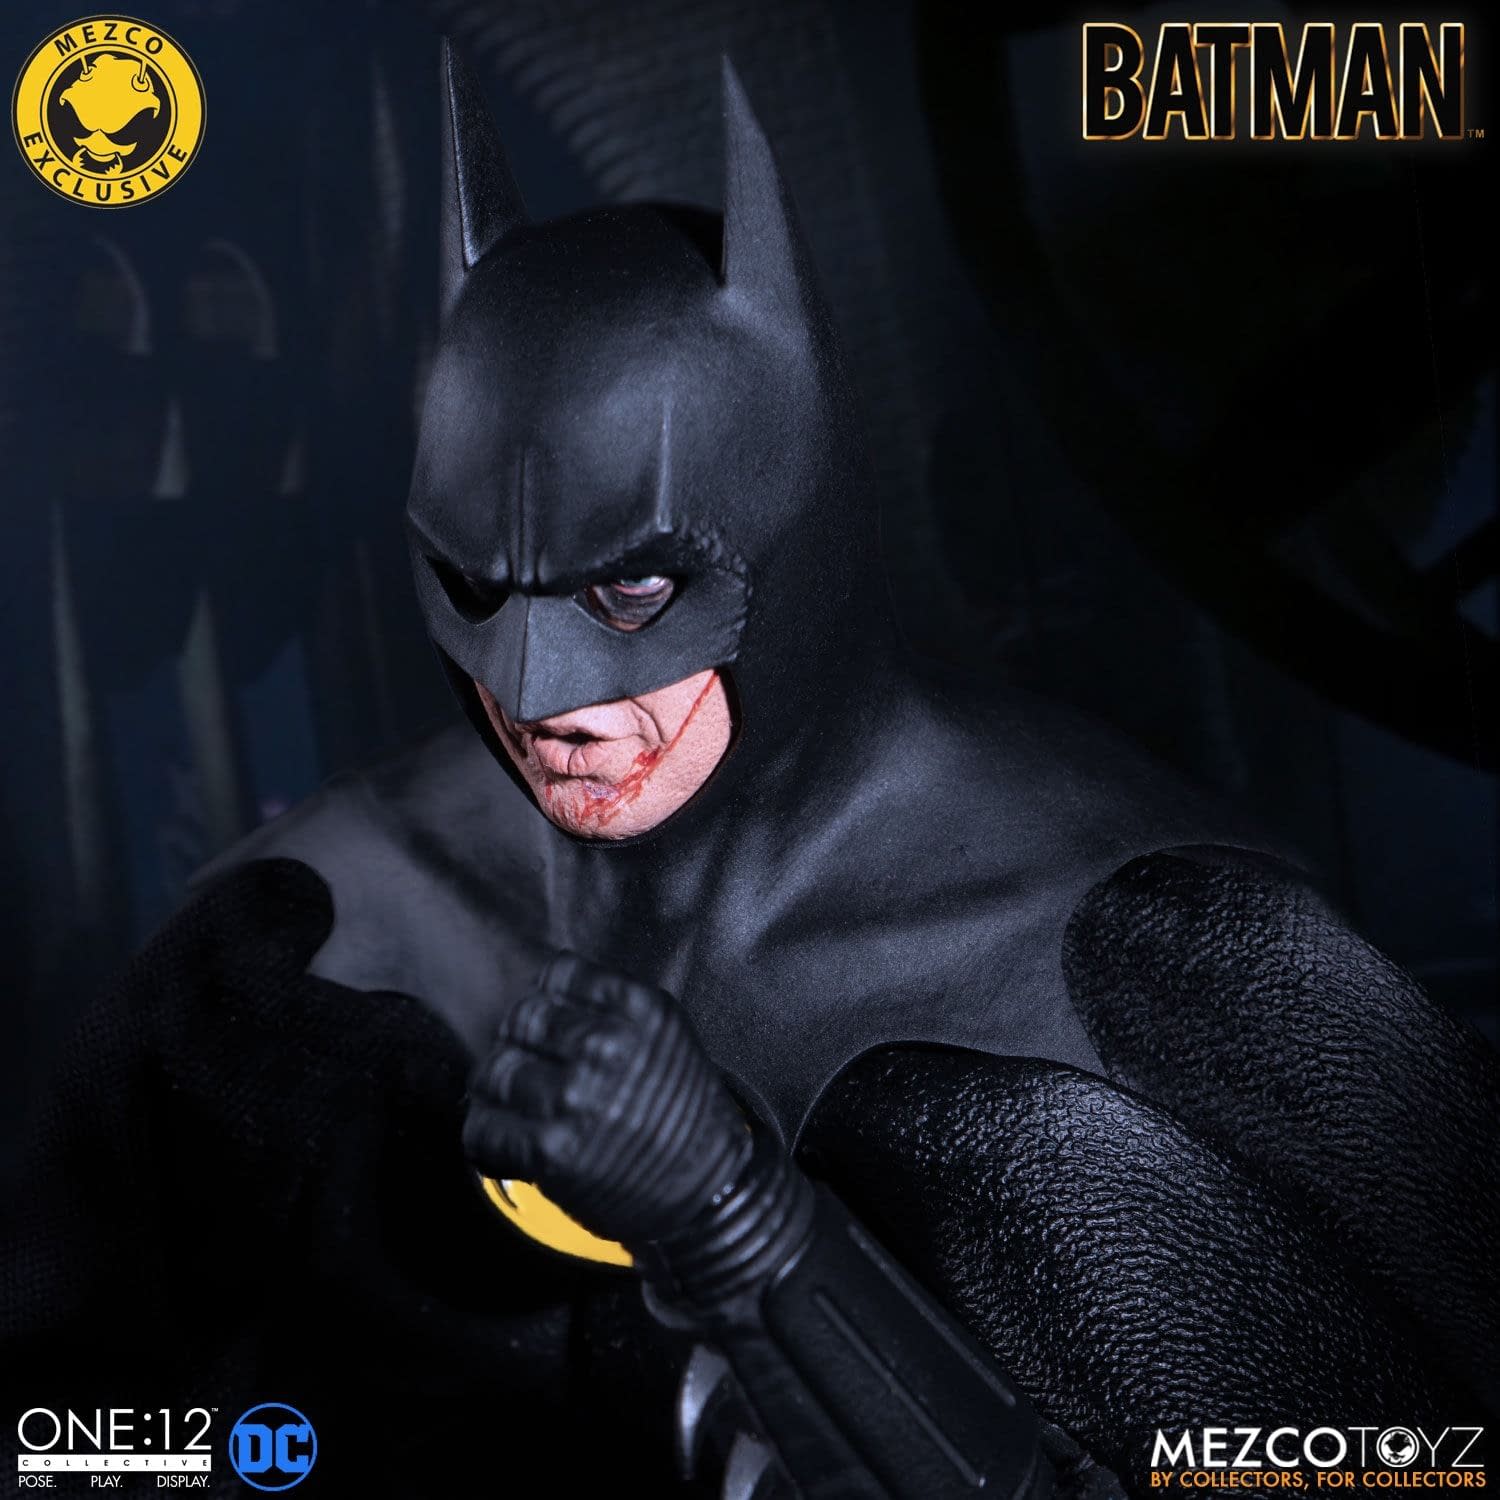 Pre-Orders for Batman 1989 One:12 Mezco Toyz Figure Goes Live